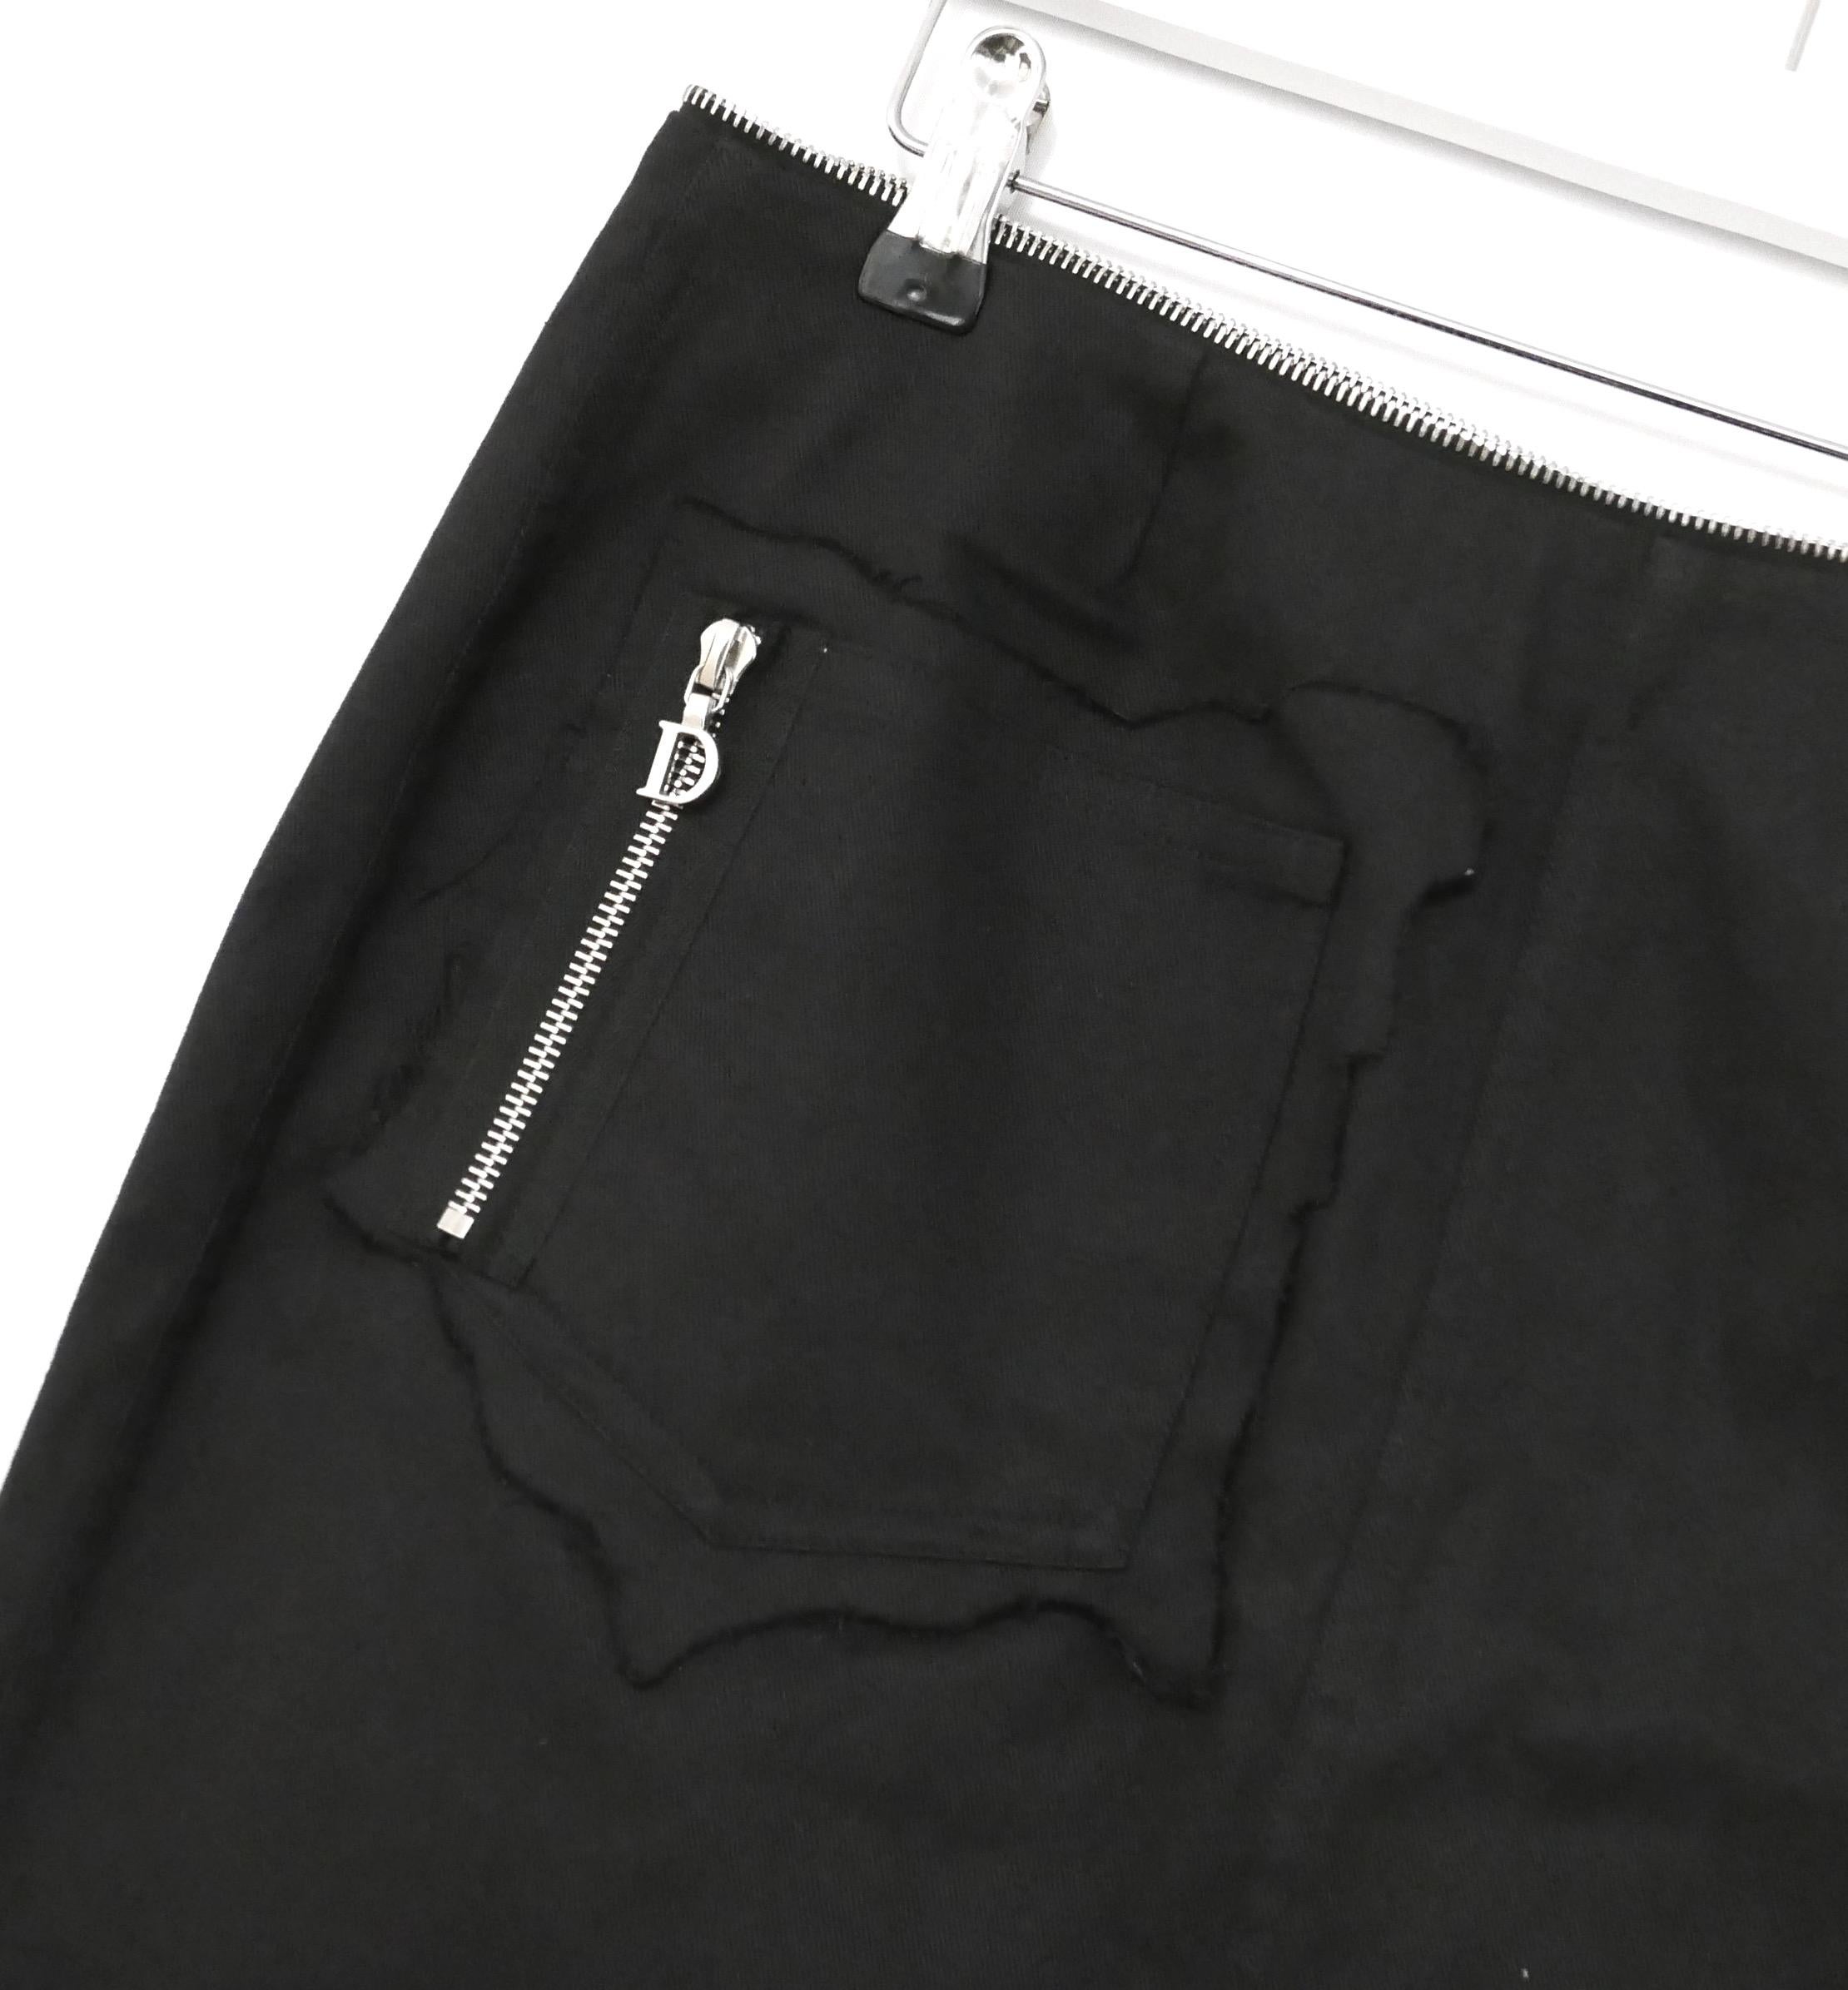 Christian Dior x John Galliano 2001 Black Denim Distressed Peplum Pencil Skirt In New Condition For Sale In London, GB